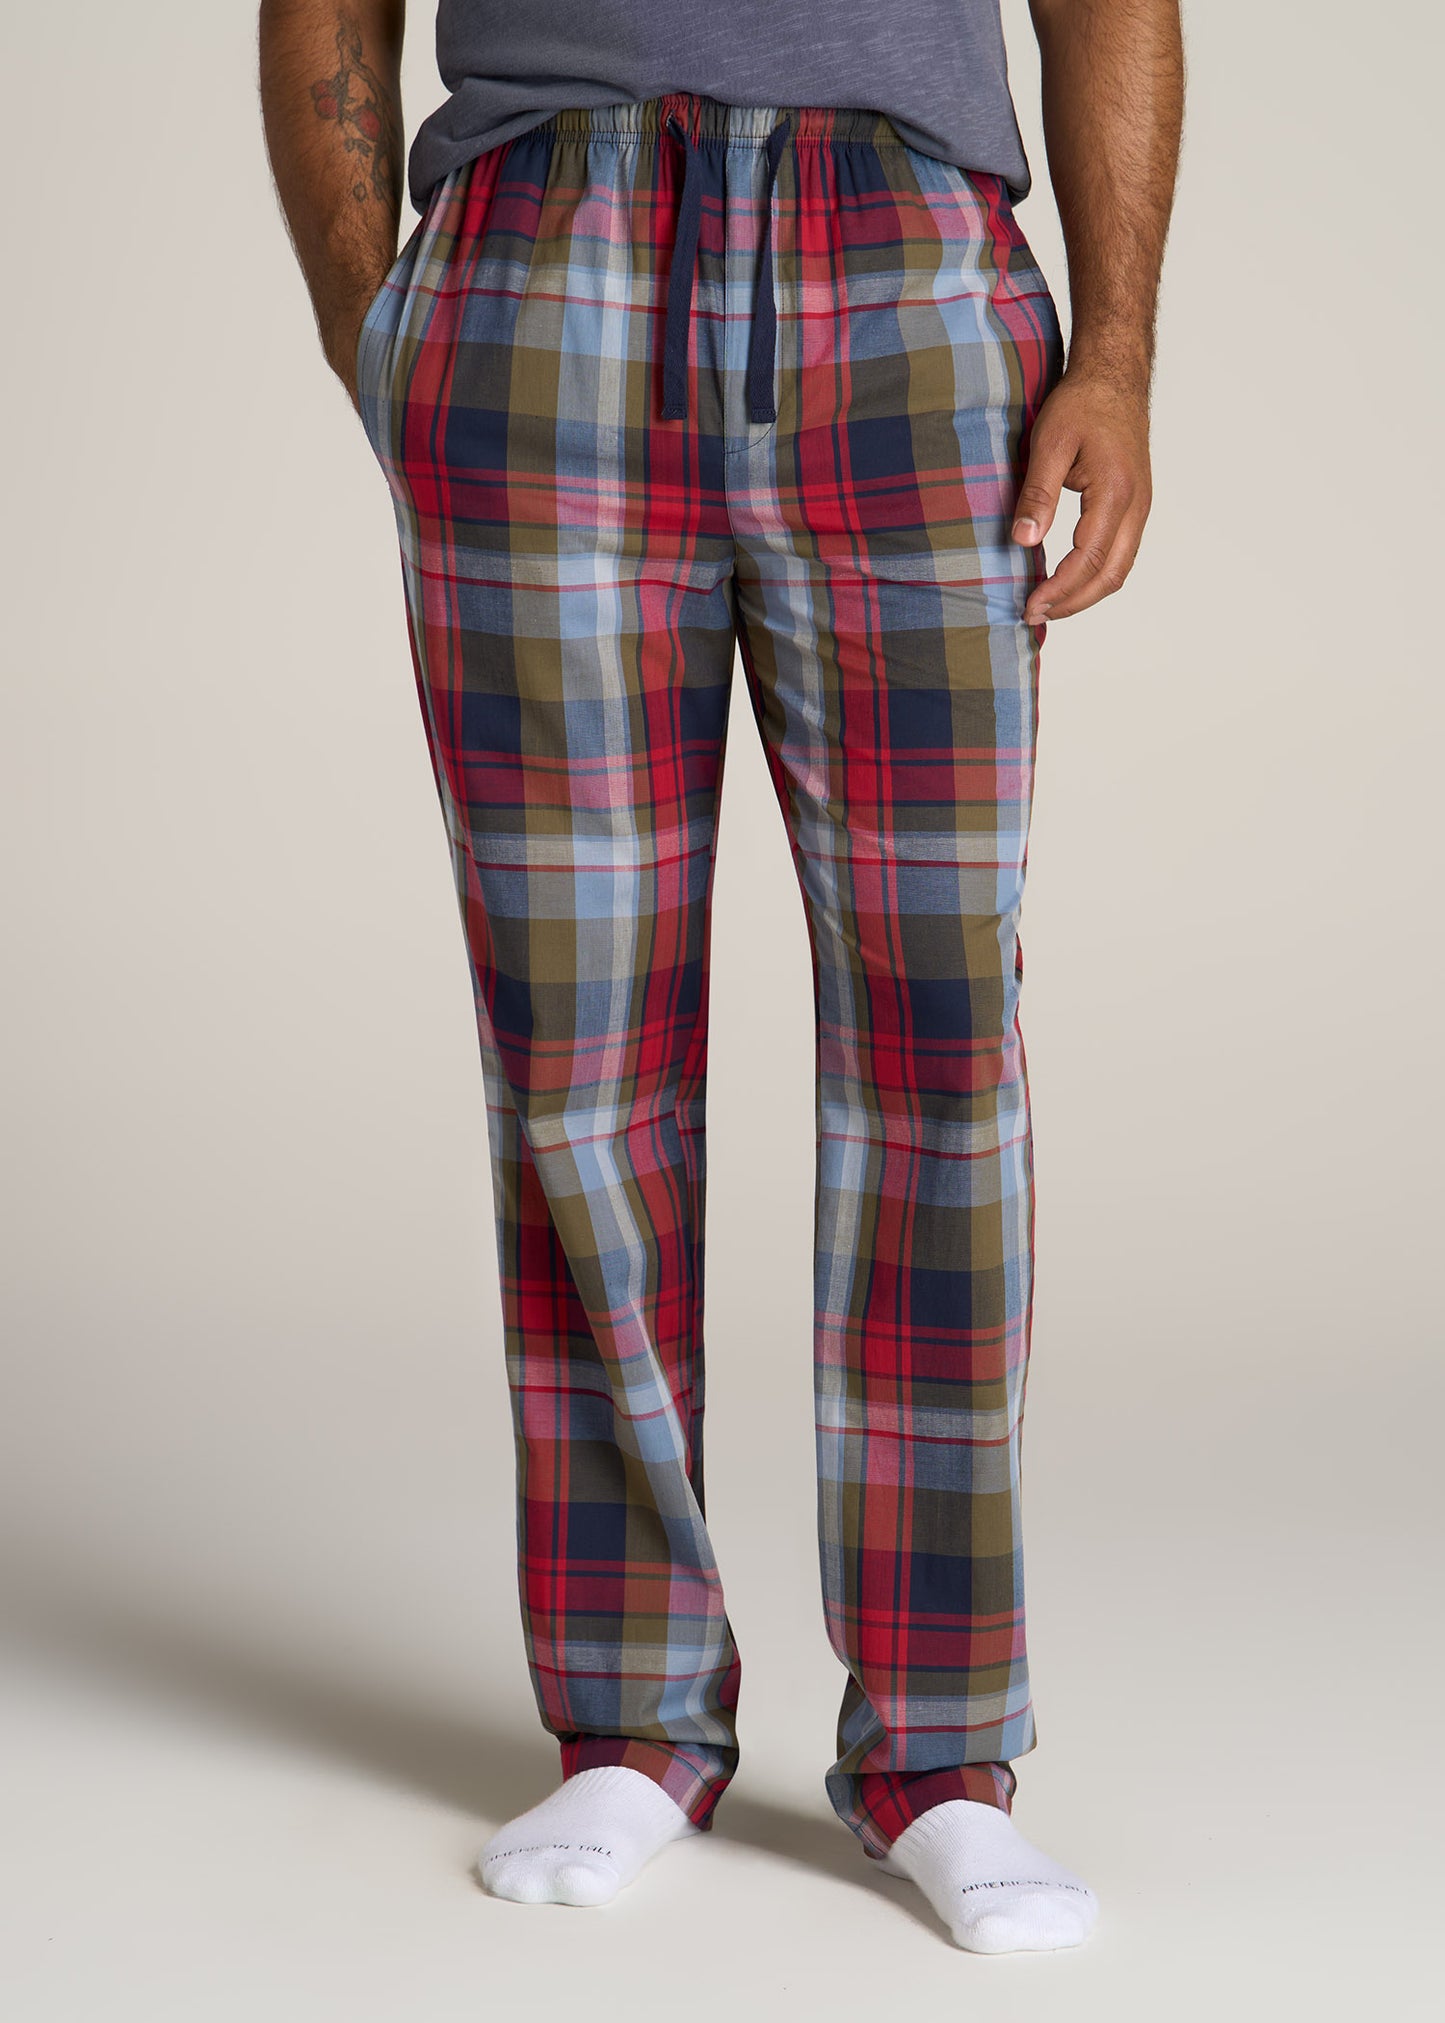 100% Cotton Plaid Pajama Pants for Women- Soft Comfortable Casual